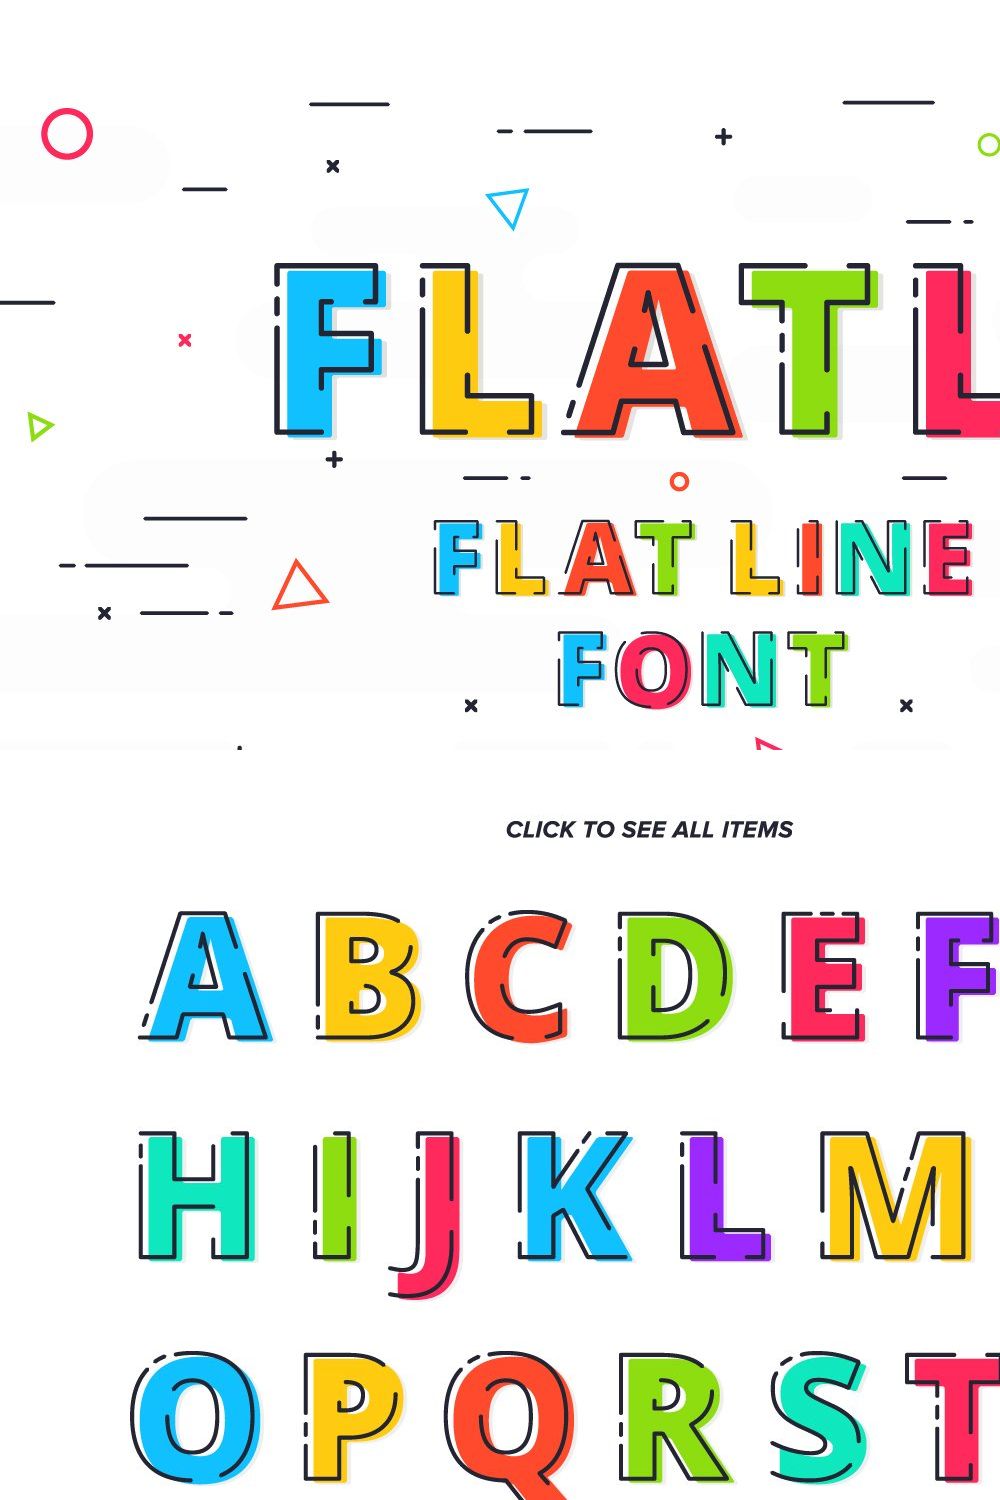 Flatli - Flat Line Vector Font pinterest preview image.